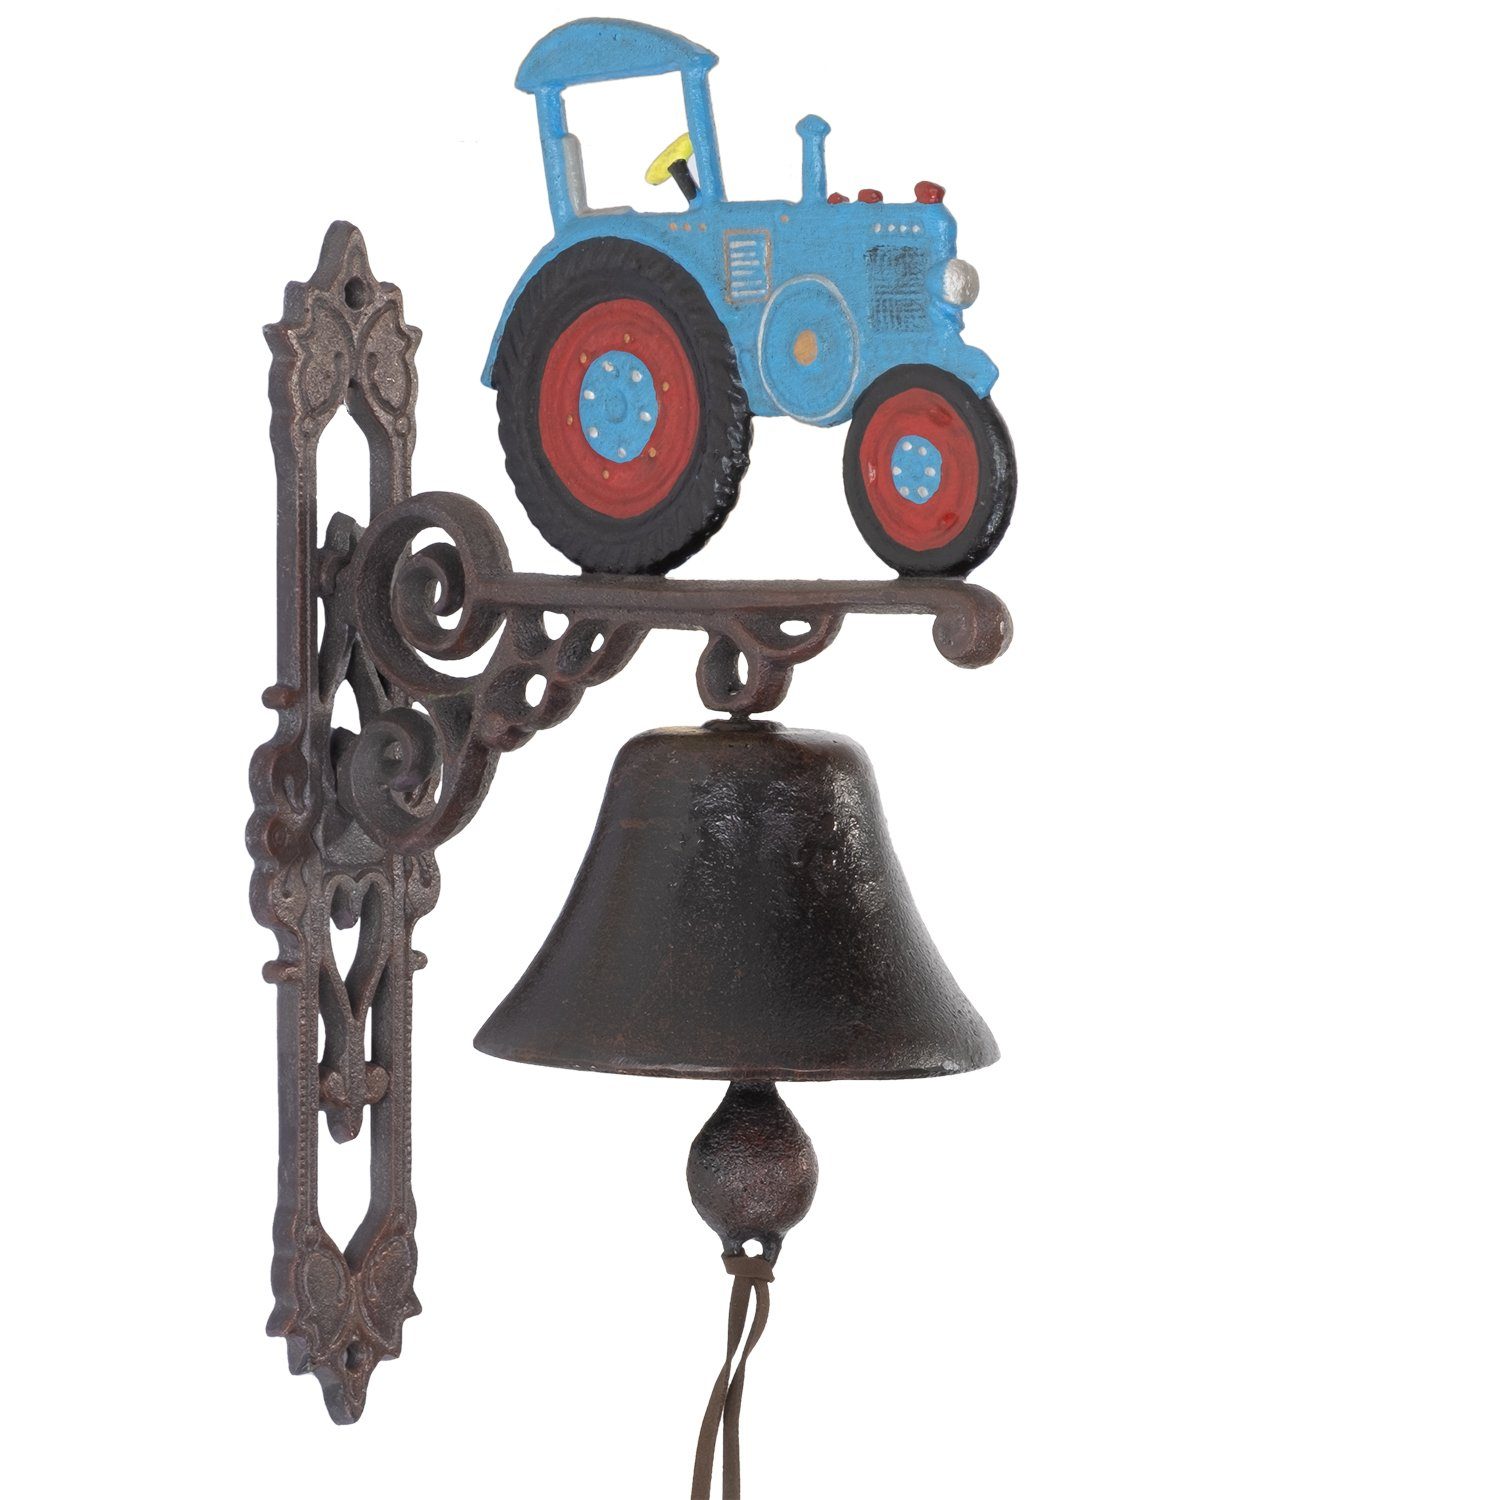 Wandglocke blau, Glocke Moritz Traktor Gong (Wandglocke), Gusseisen Antik Trecker Gartenfigur Klingel Türglocke Landhaus Glocke